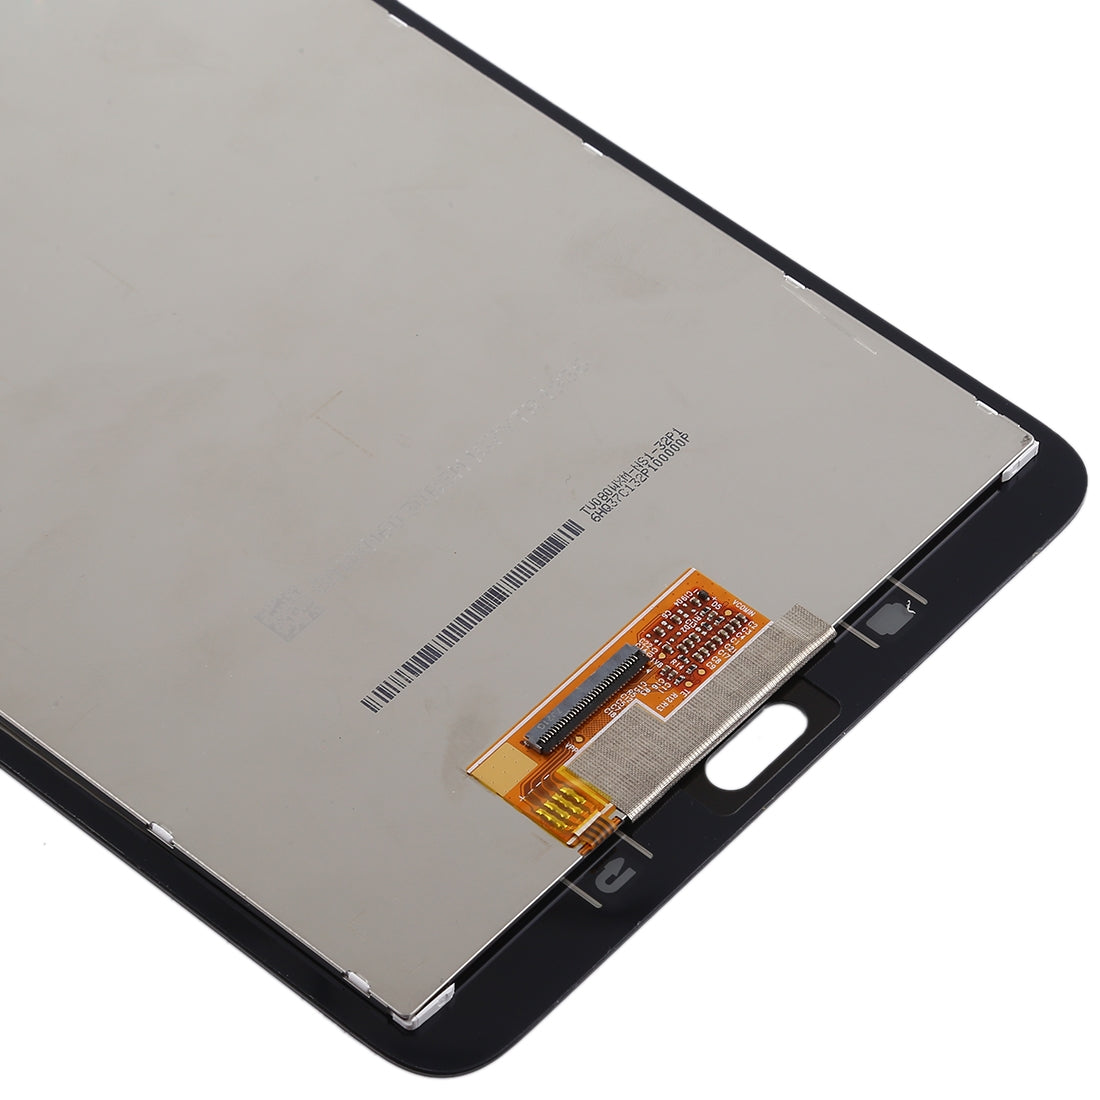 Pantalla LCD + Tactil Samsung Galaxy Tab E 8.0 T377 (Versión Wifi) Negro